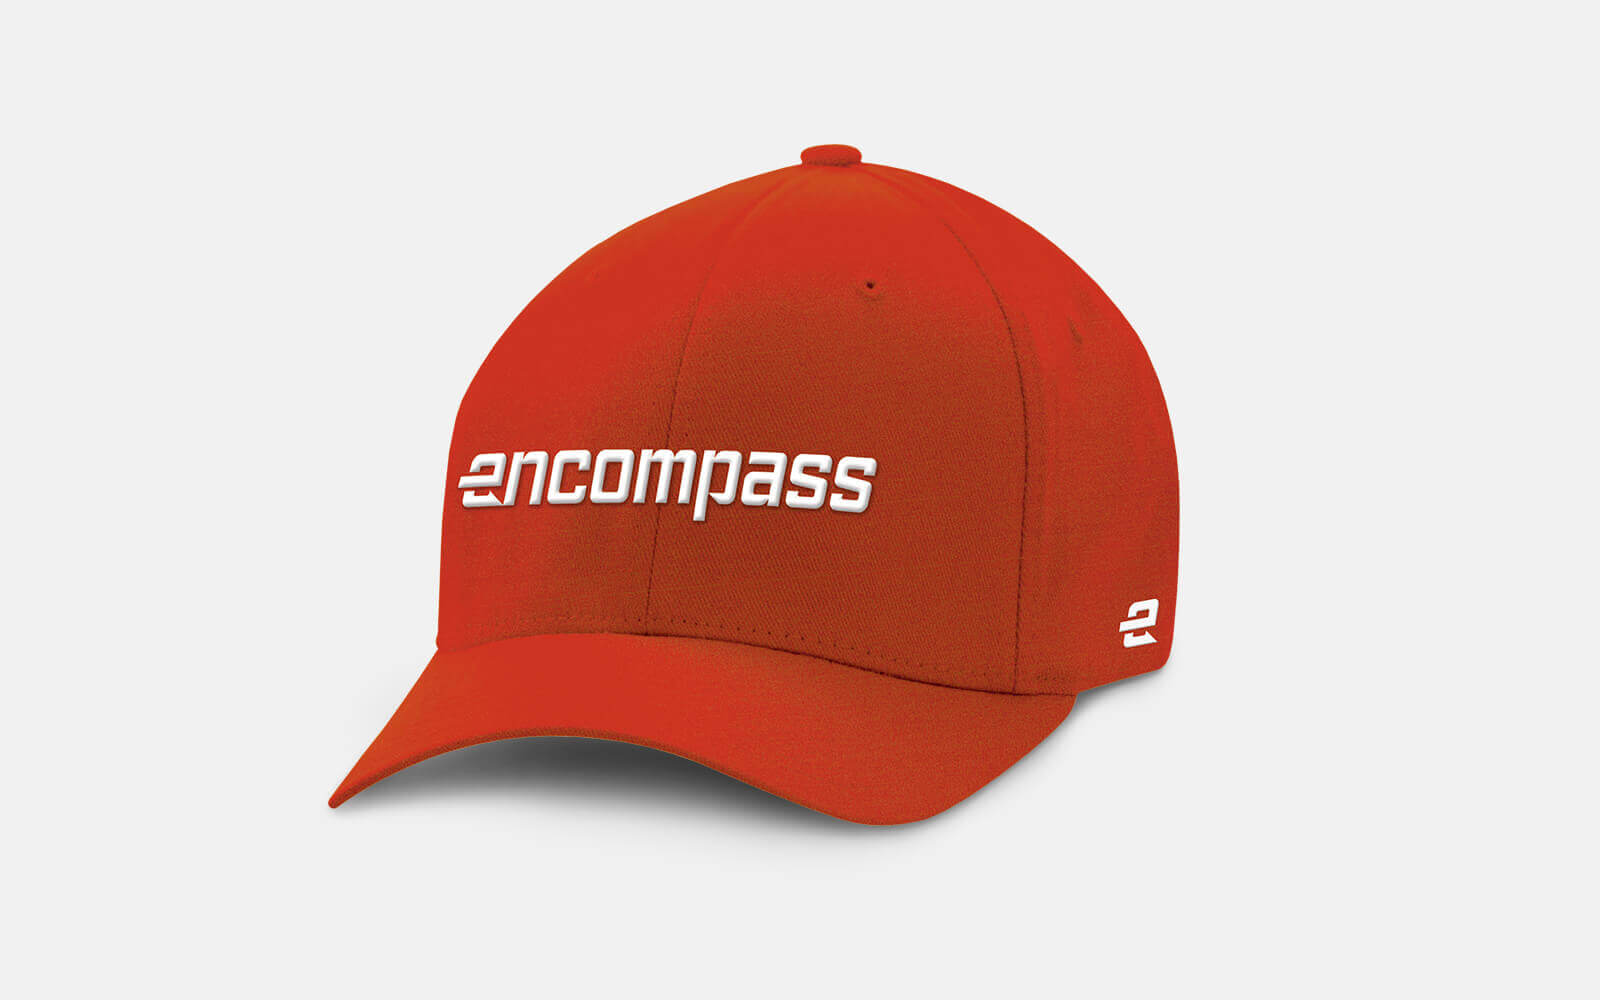 Encompass Hat